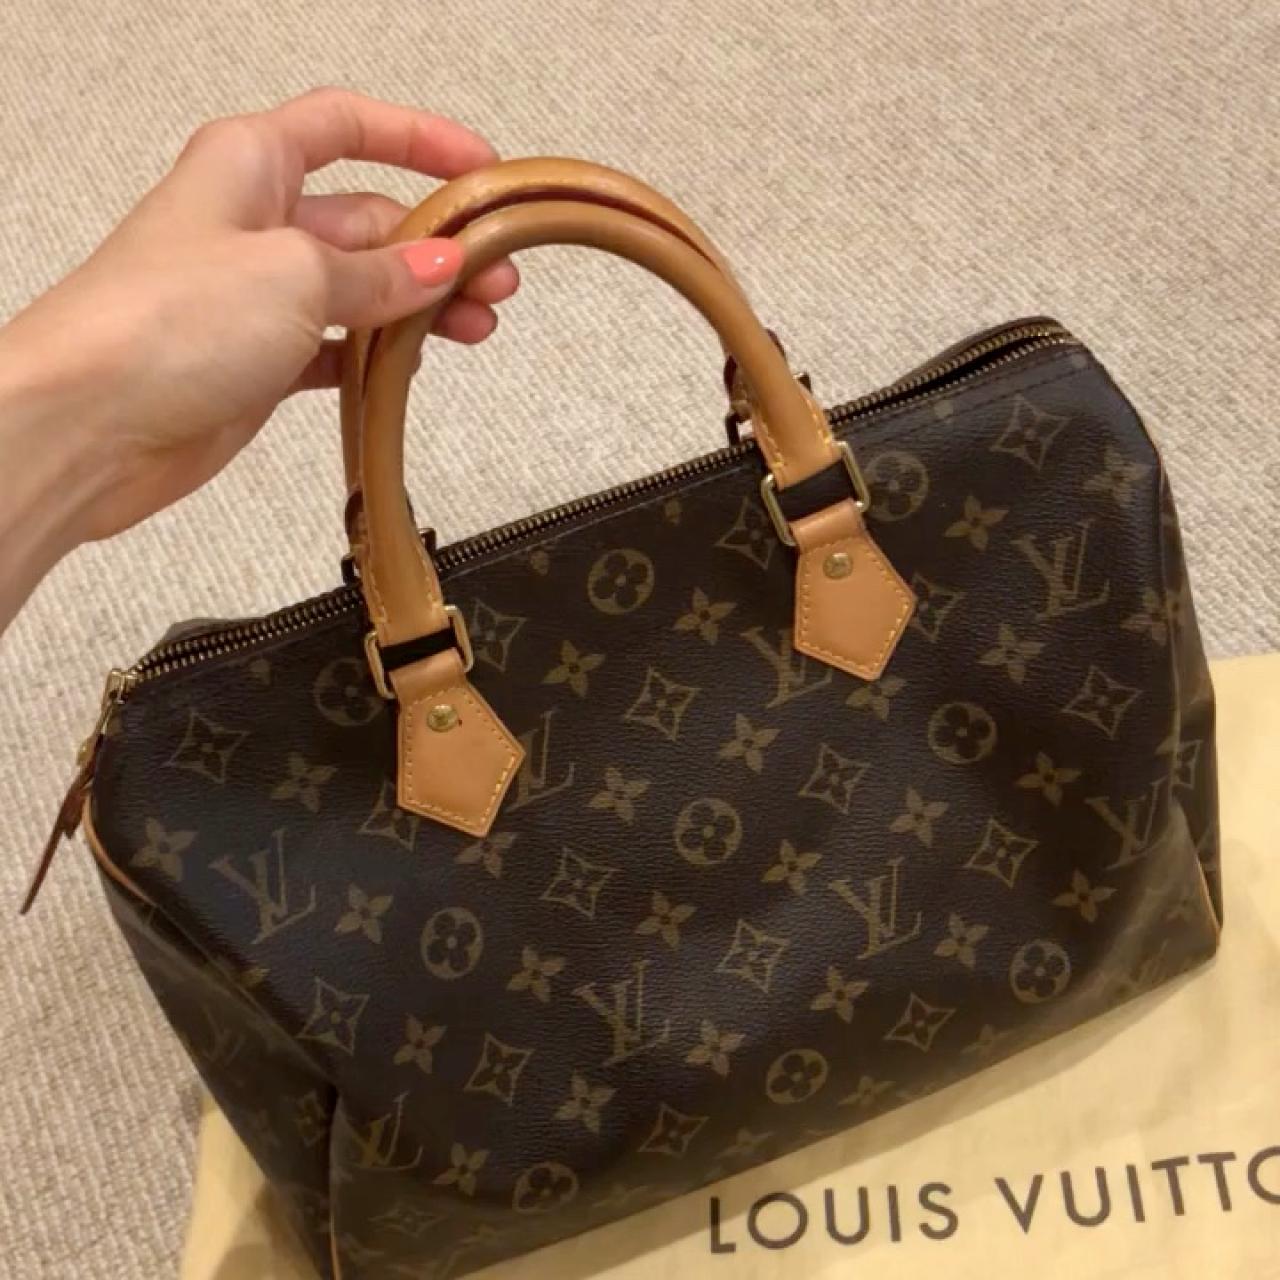 Louis Vuitton vintage speedy bag Bought 11 years ago - Depop